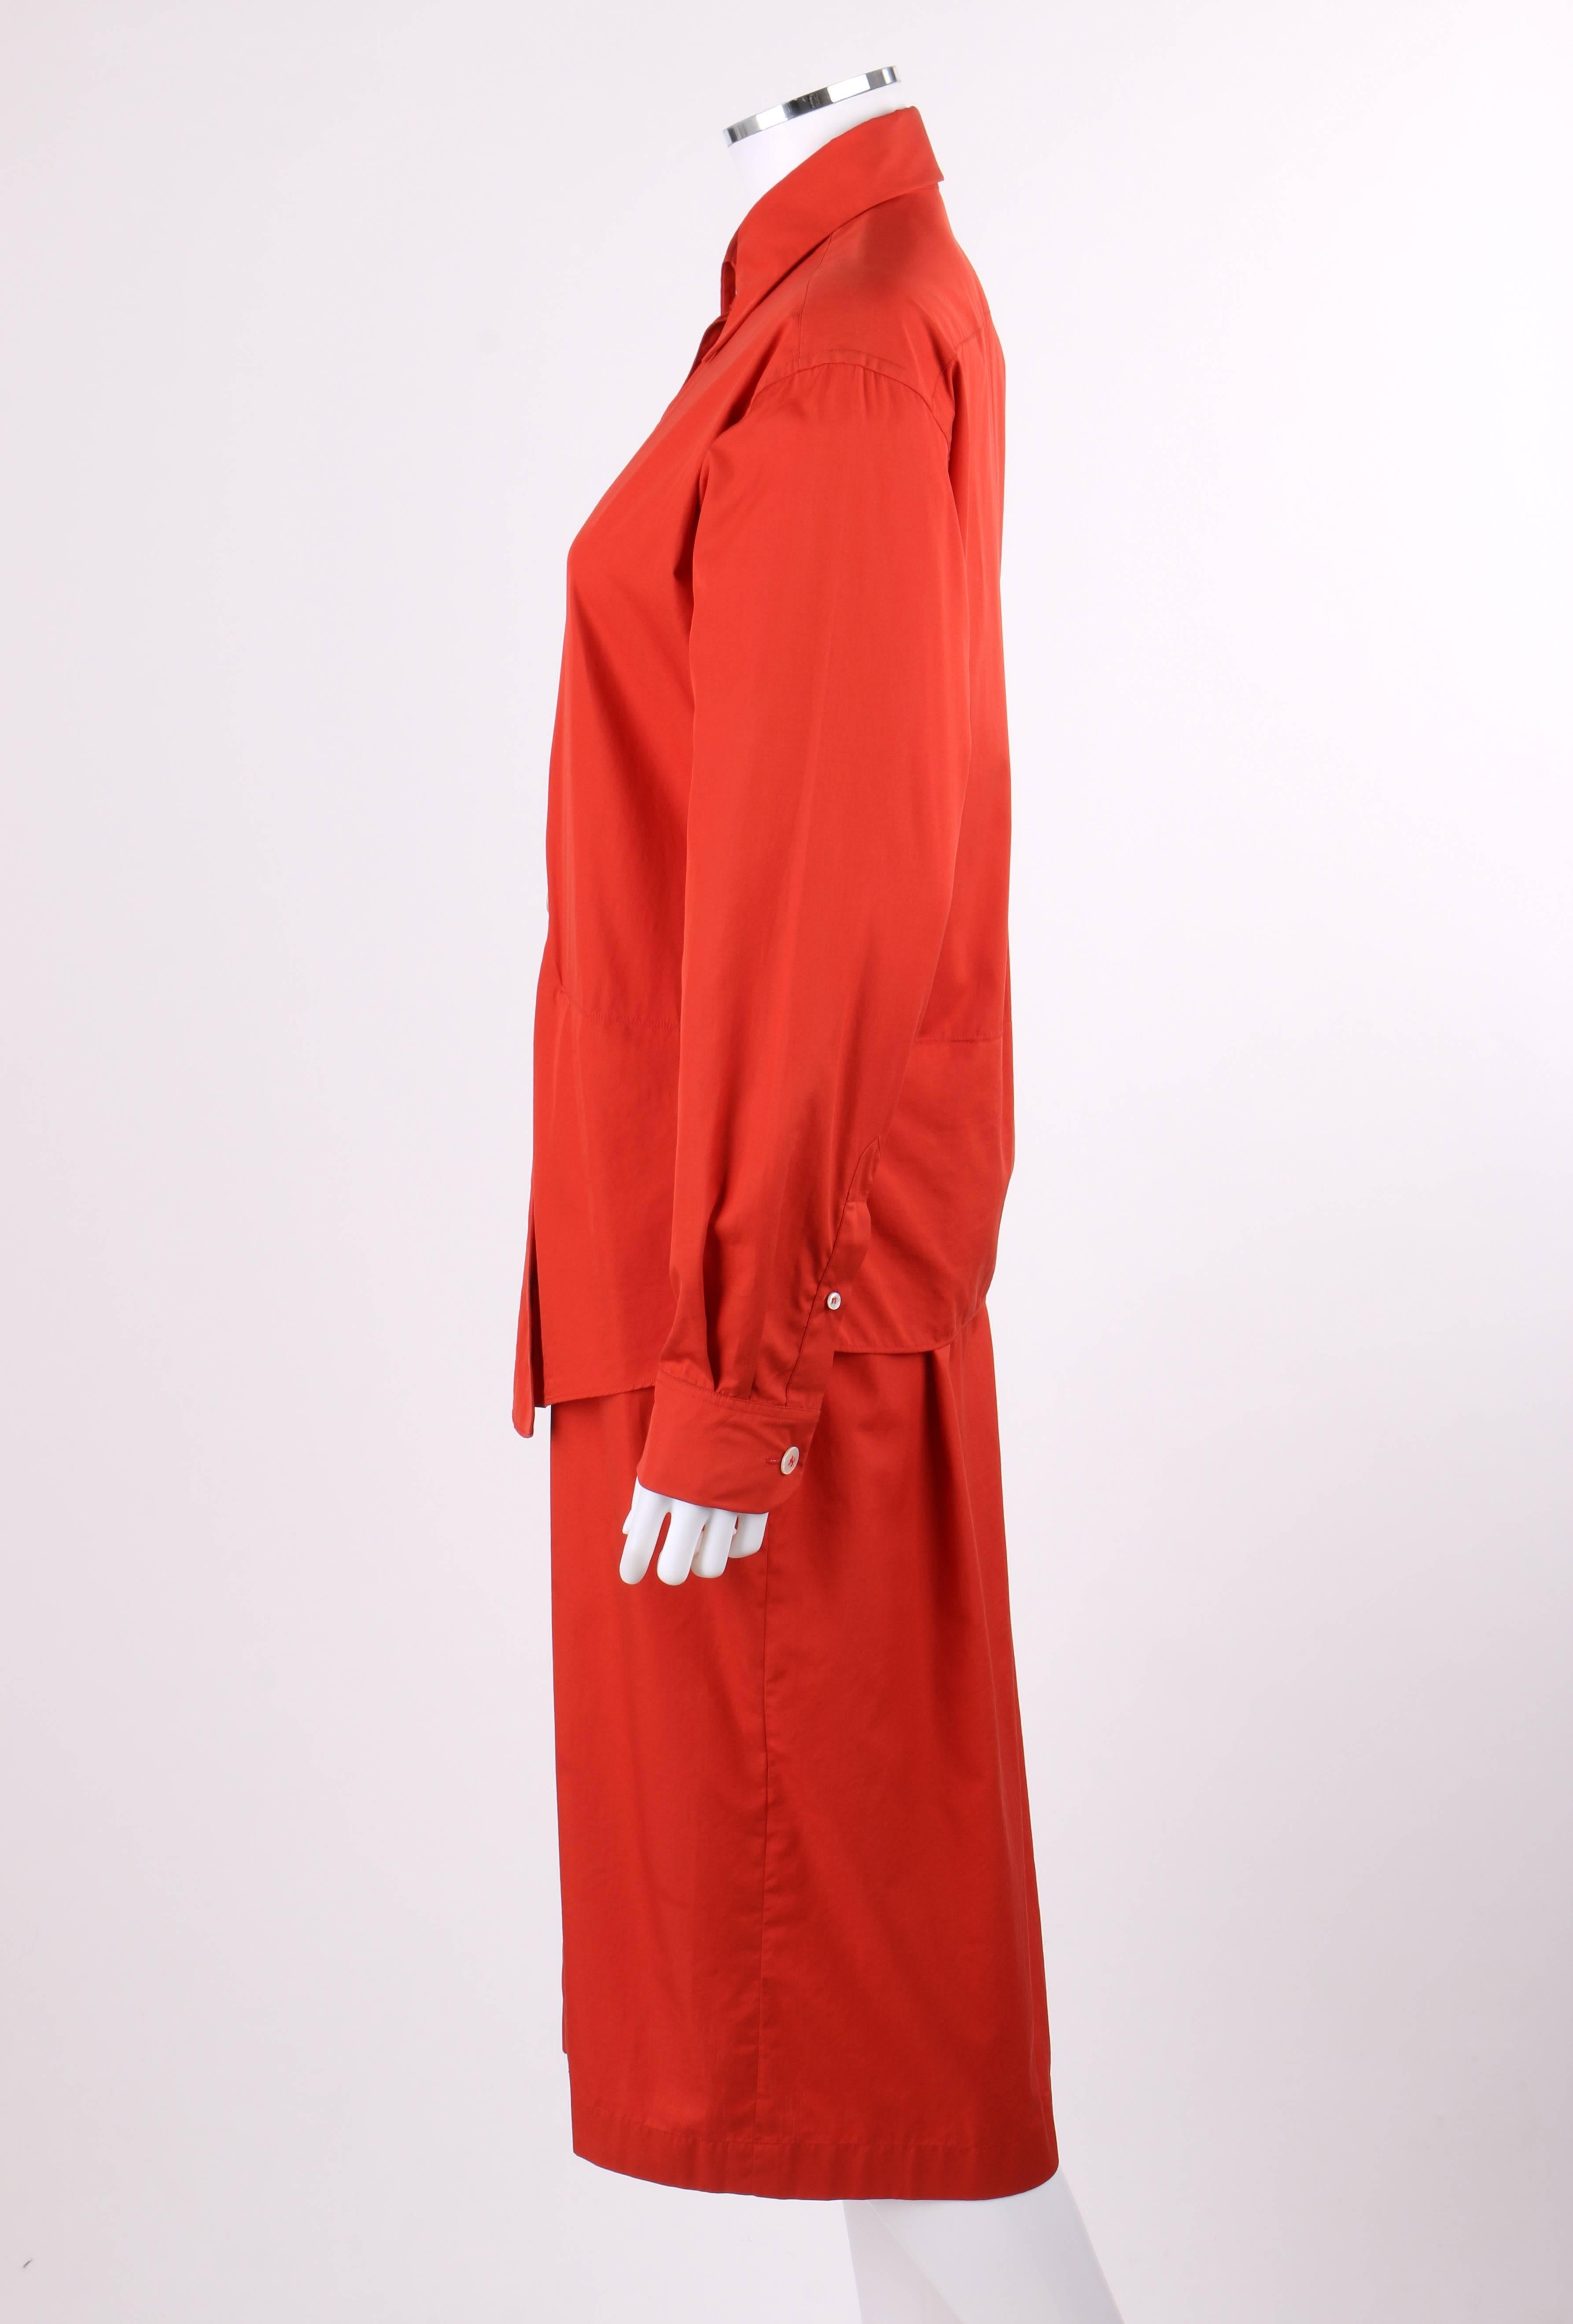 Red HERMES S/S 2004 Martin Margiela Coquelicot Tie Front Shirt Waist Dress